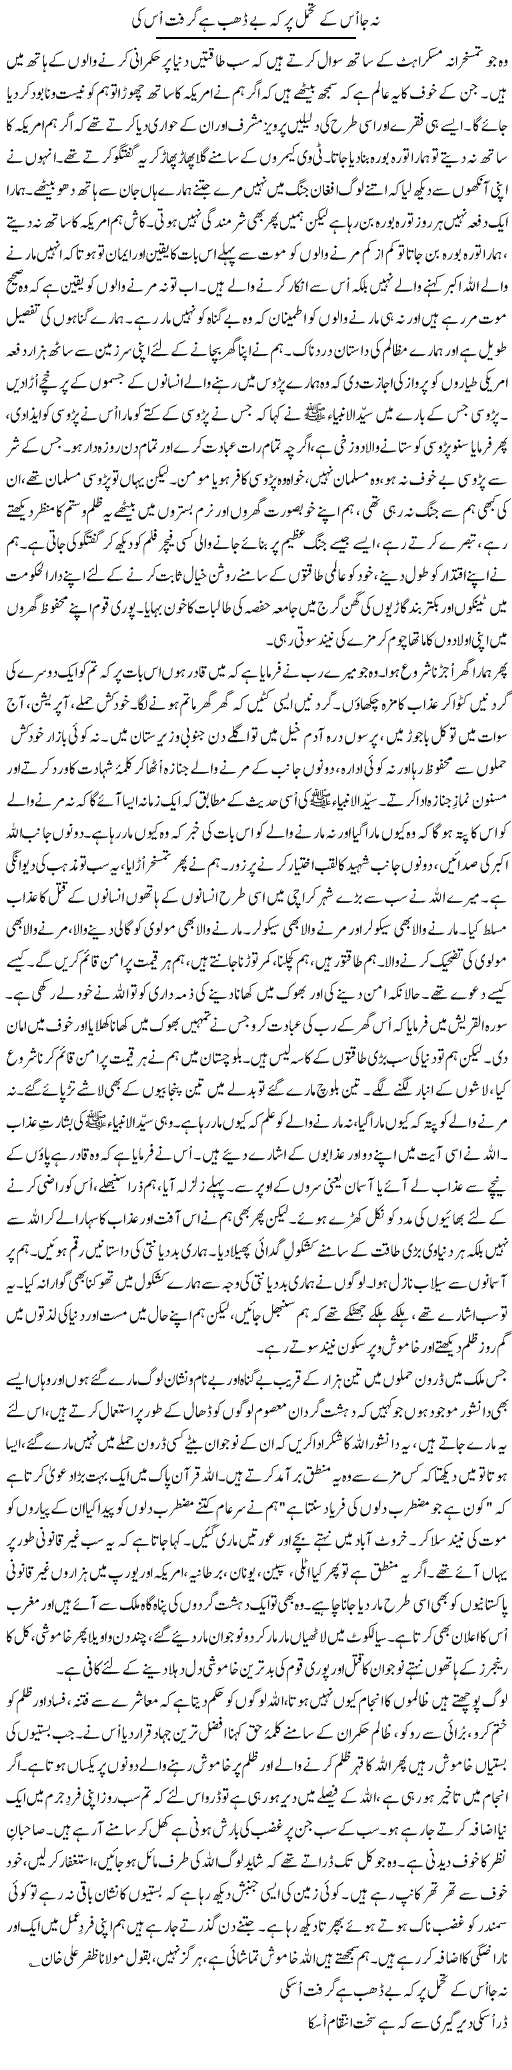 A True Muslim Express Column Orya Maqbool 12 June 2011